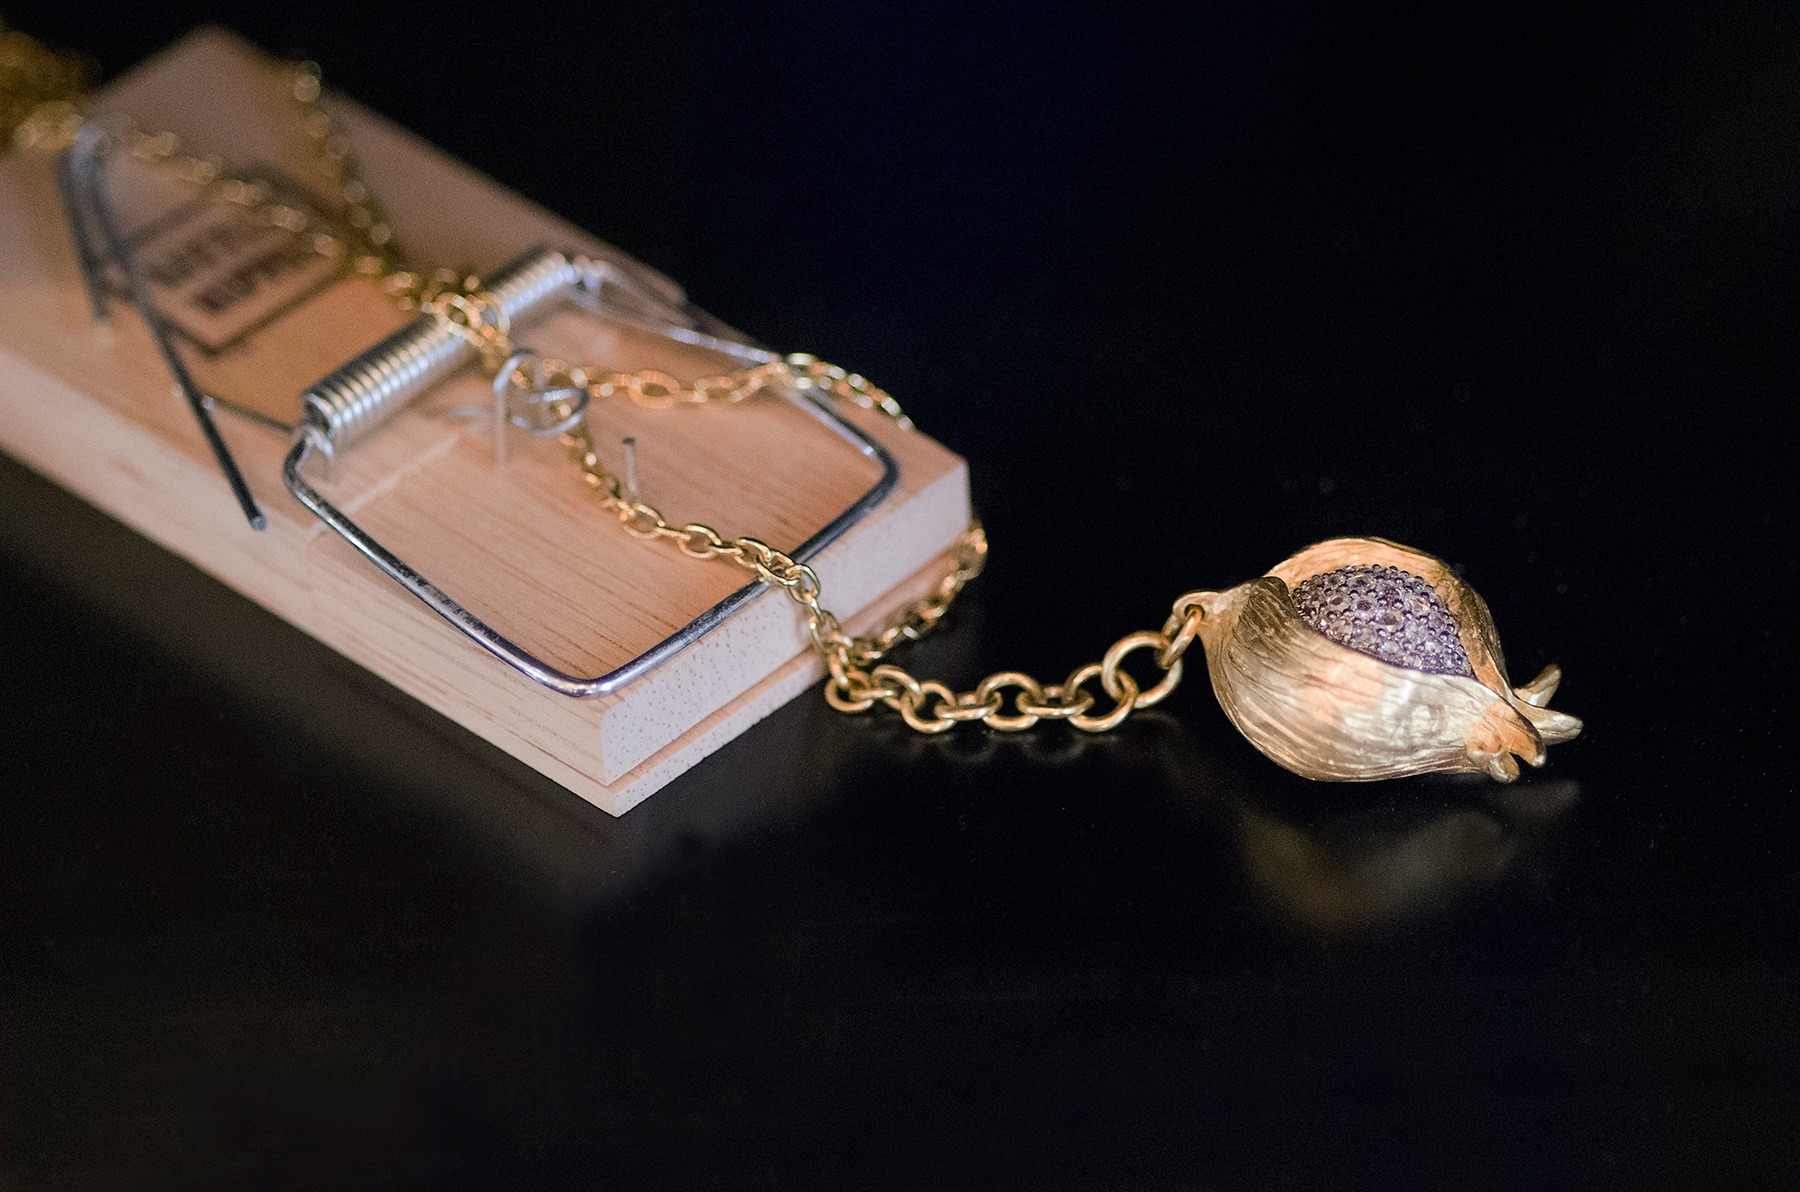 Annoushka Milestones Exhibition display cabinet - Mousetrap with Annoushka pomegranate pendant